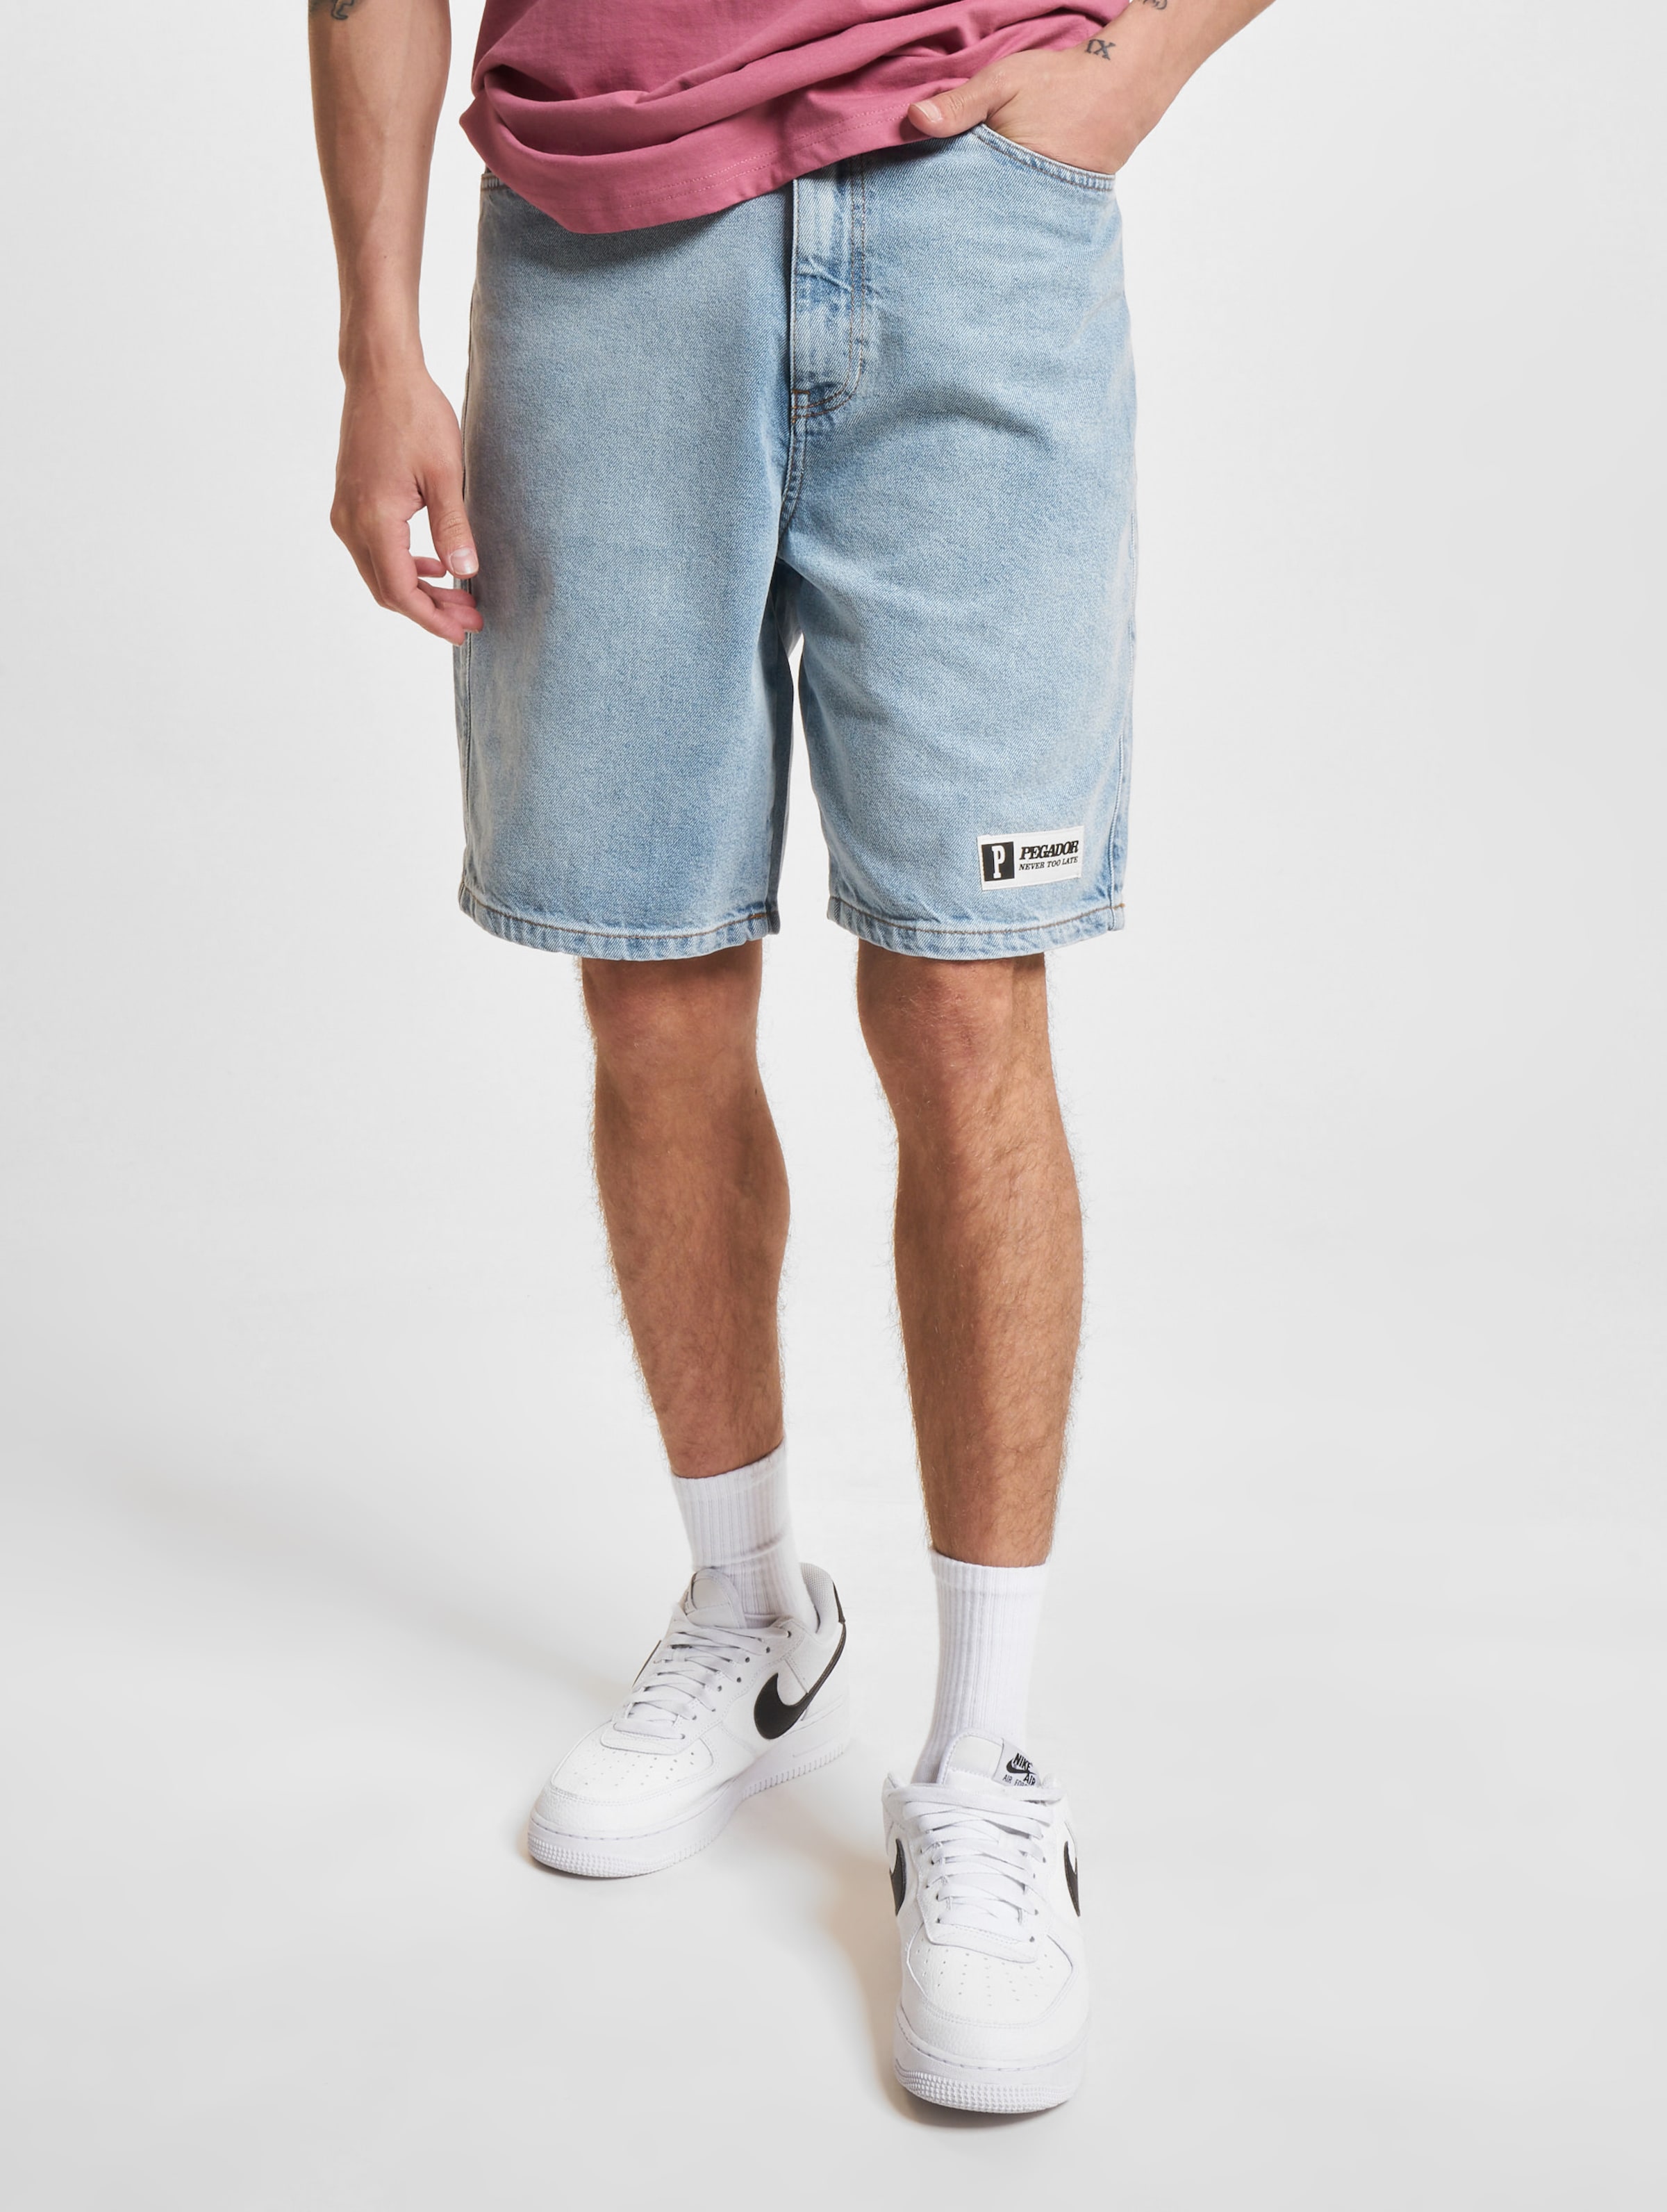 PEGADOR Moores Jeans Shorts Männer,Unisex op kleur blauw, Maat 30